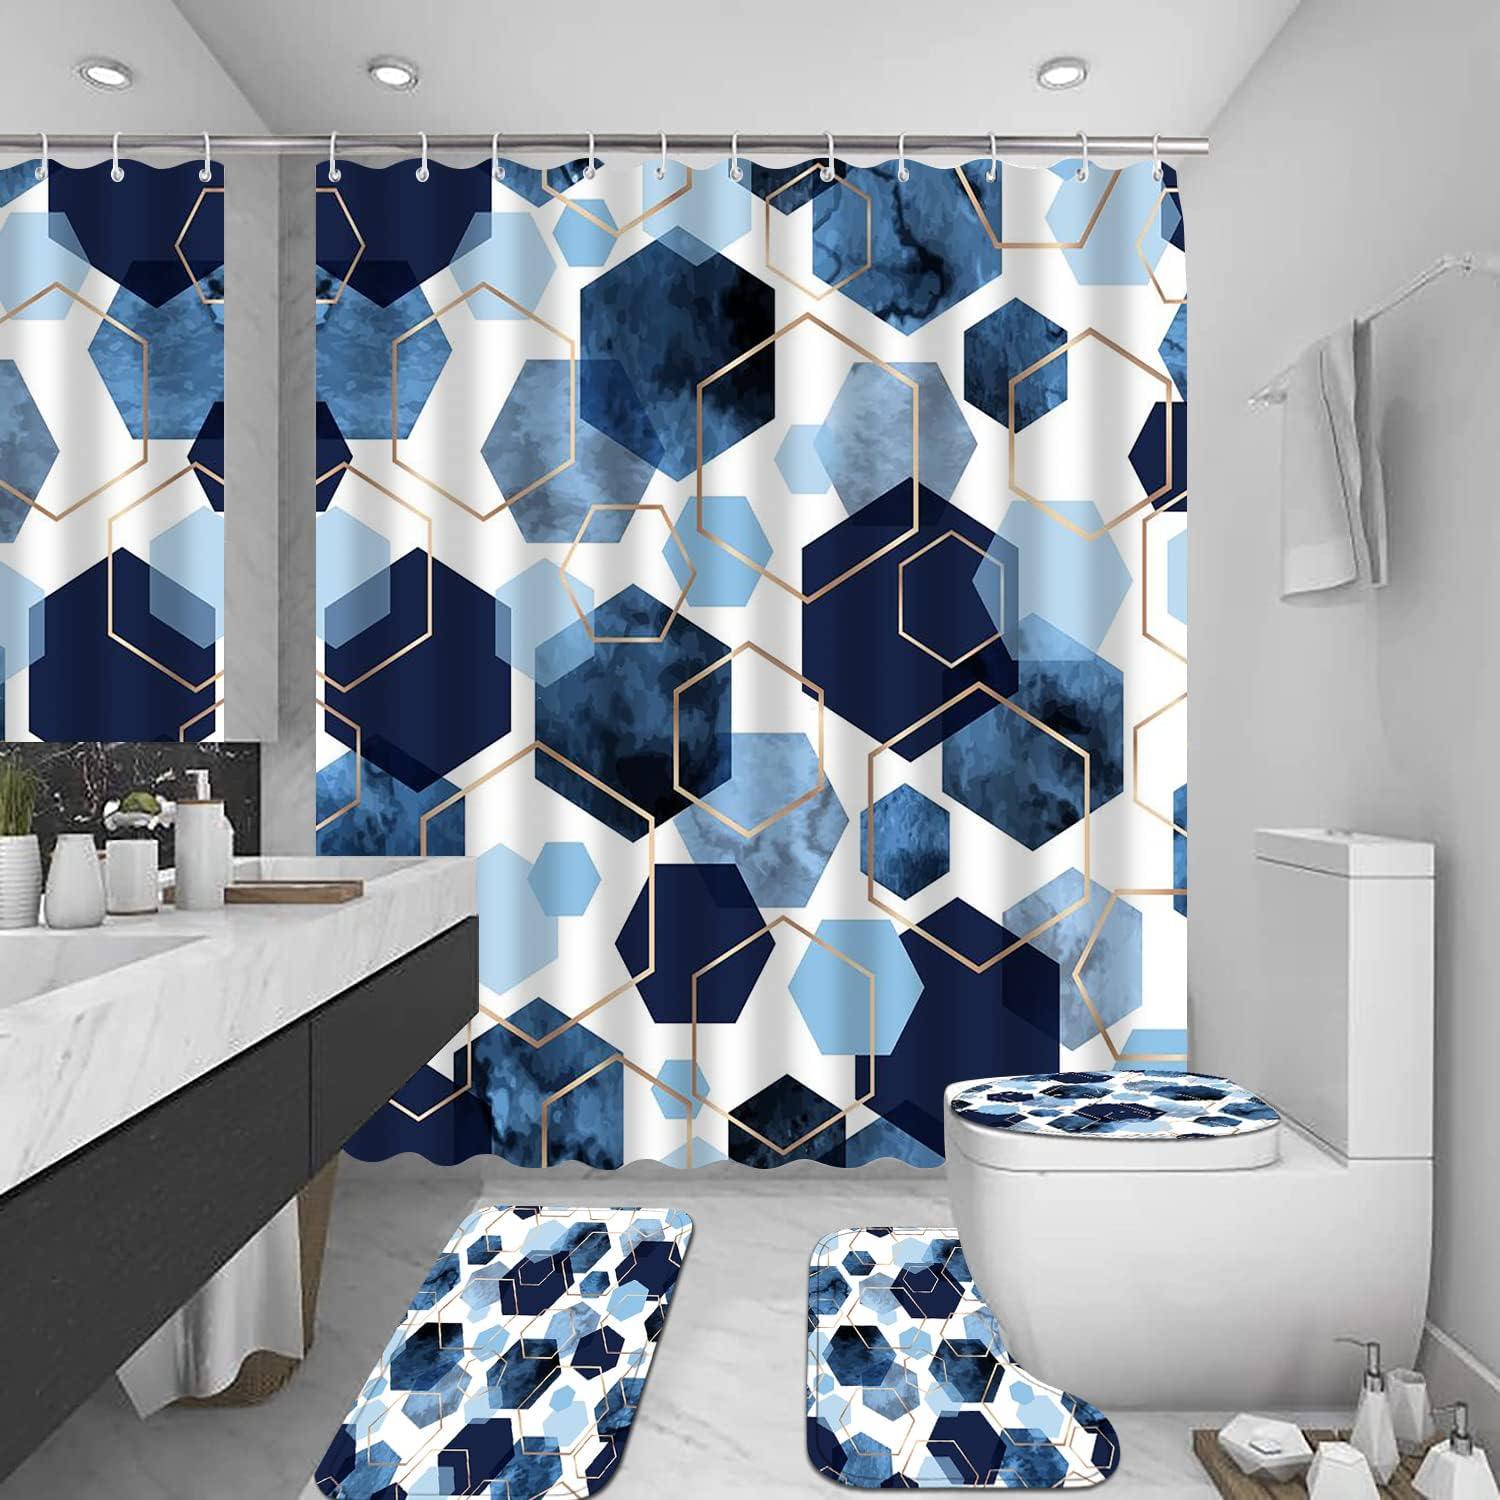 Cortina de ducha geométrica moderna azul, cortinas de ducha